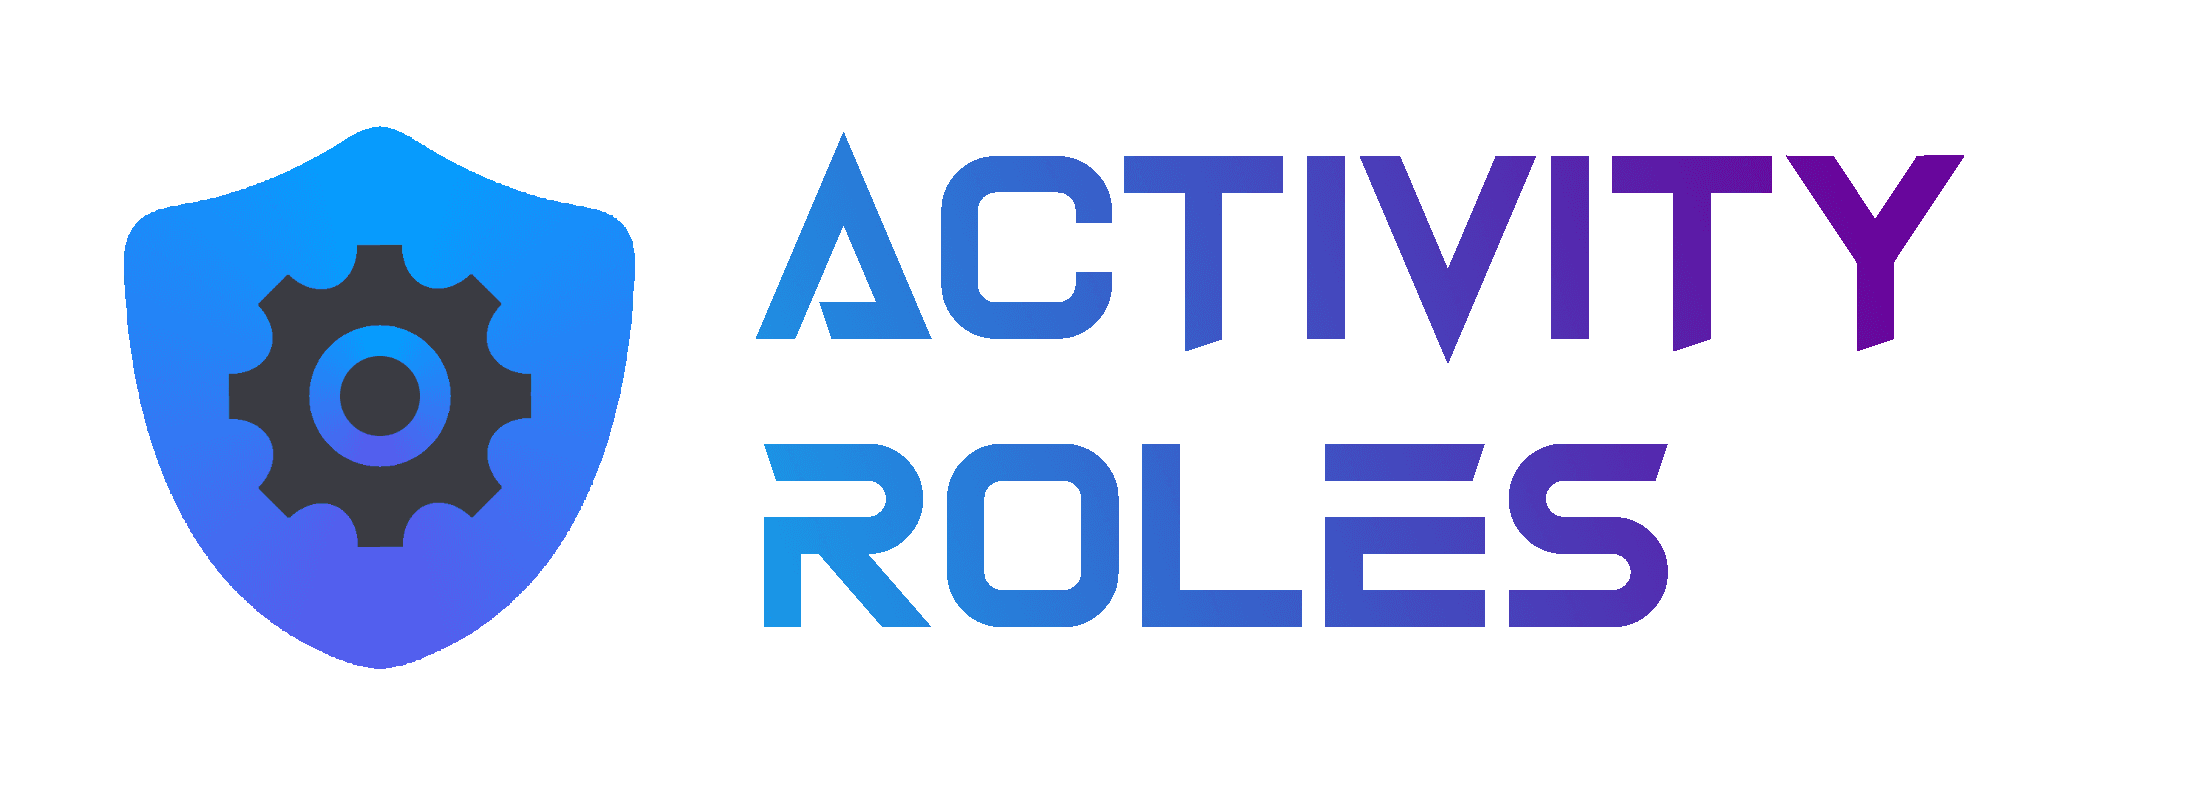 Activity Roles